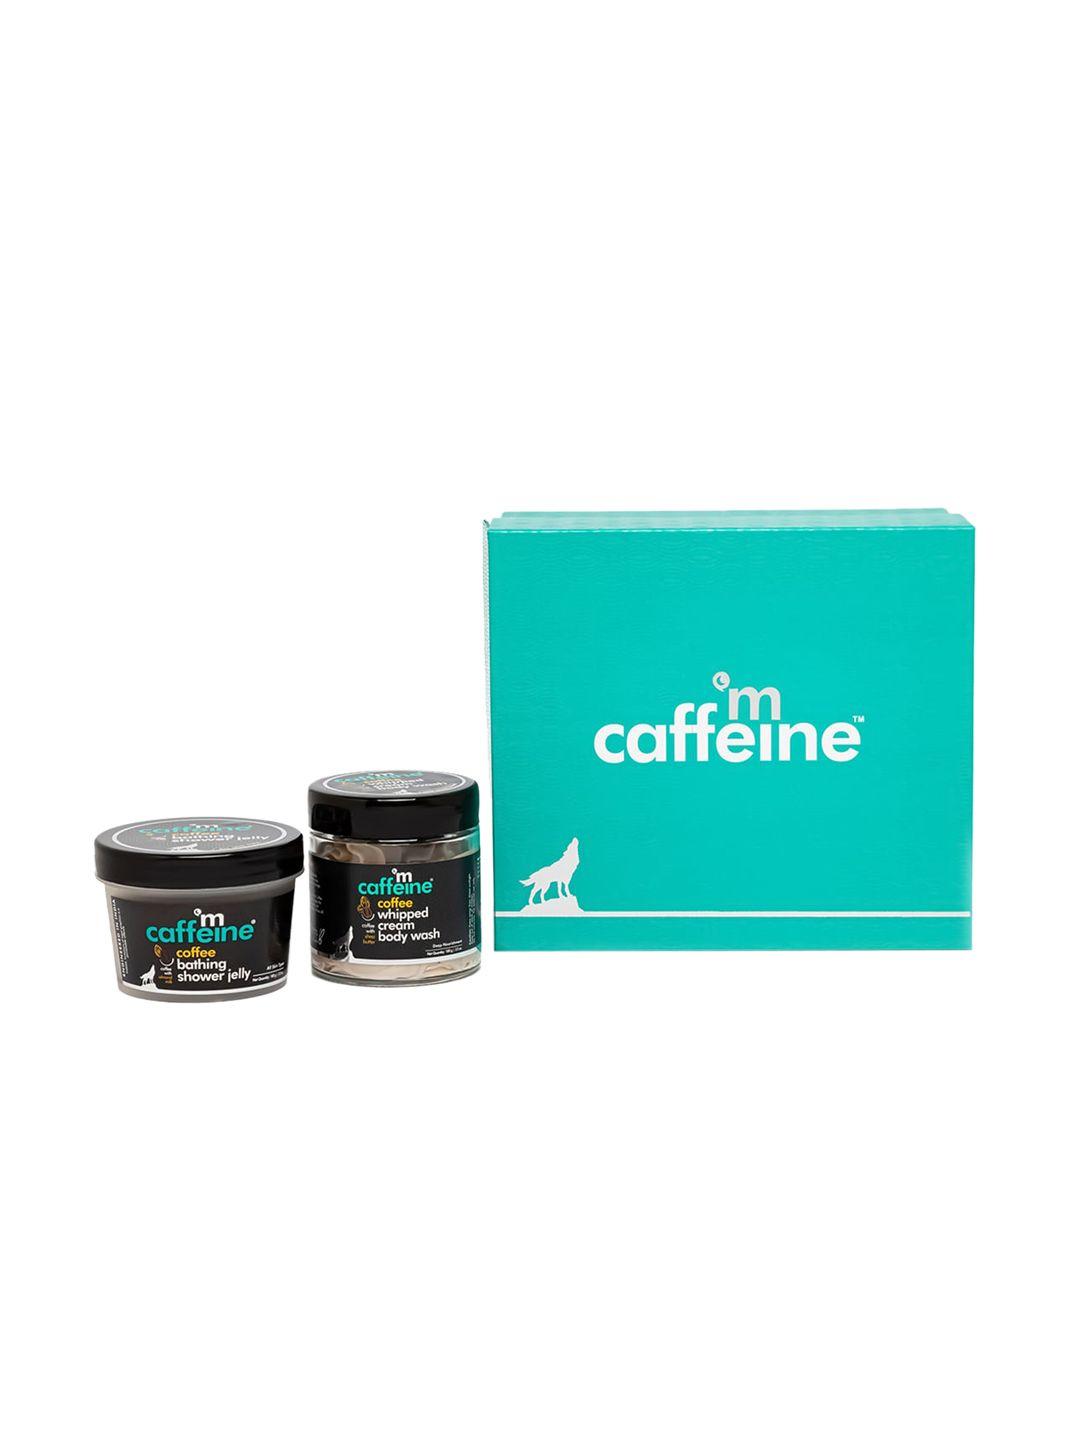 mcaffeine  coffee shower play gift kit 200 gm